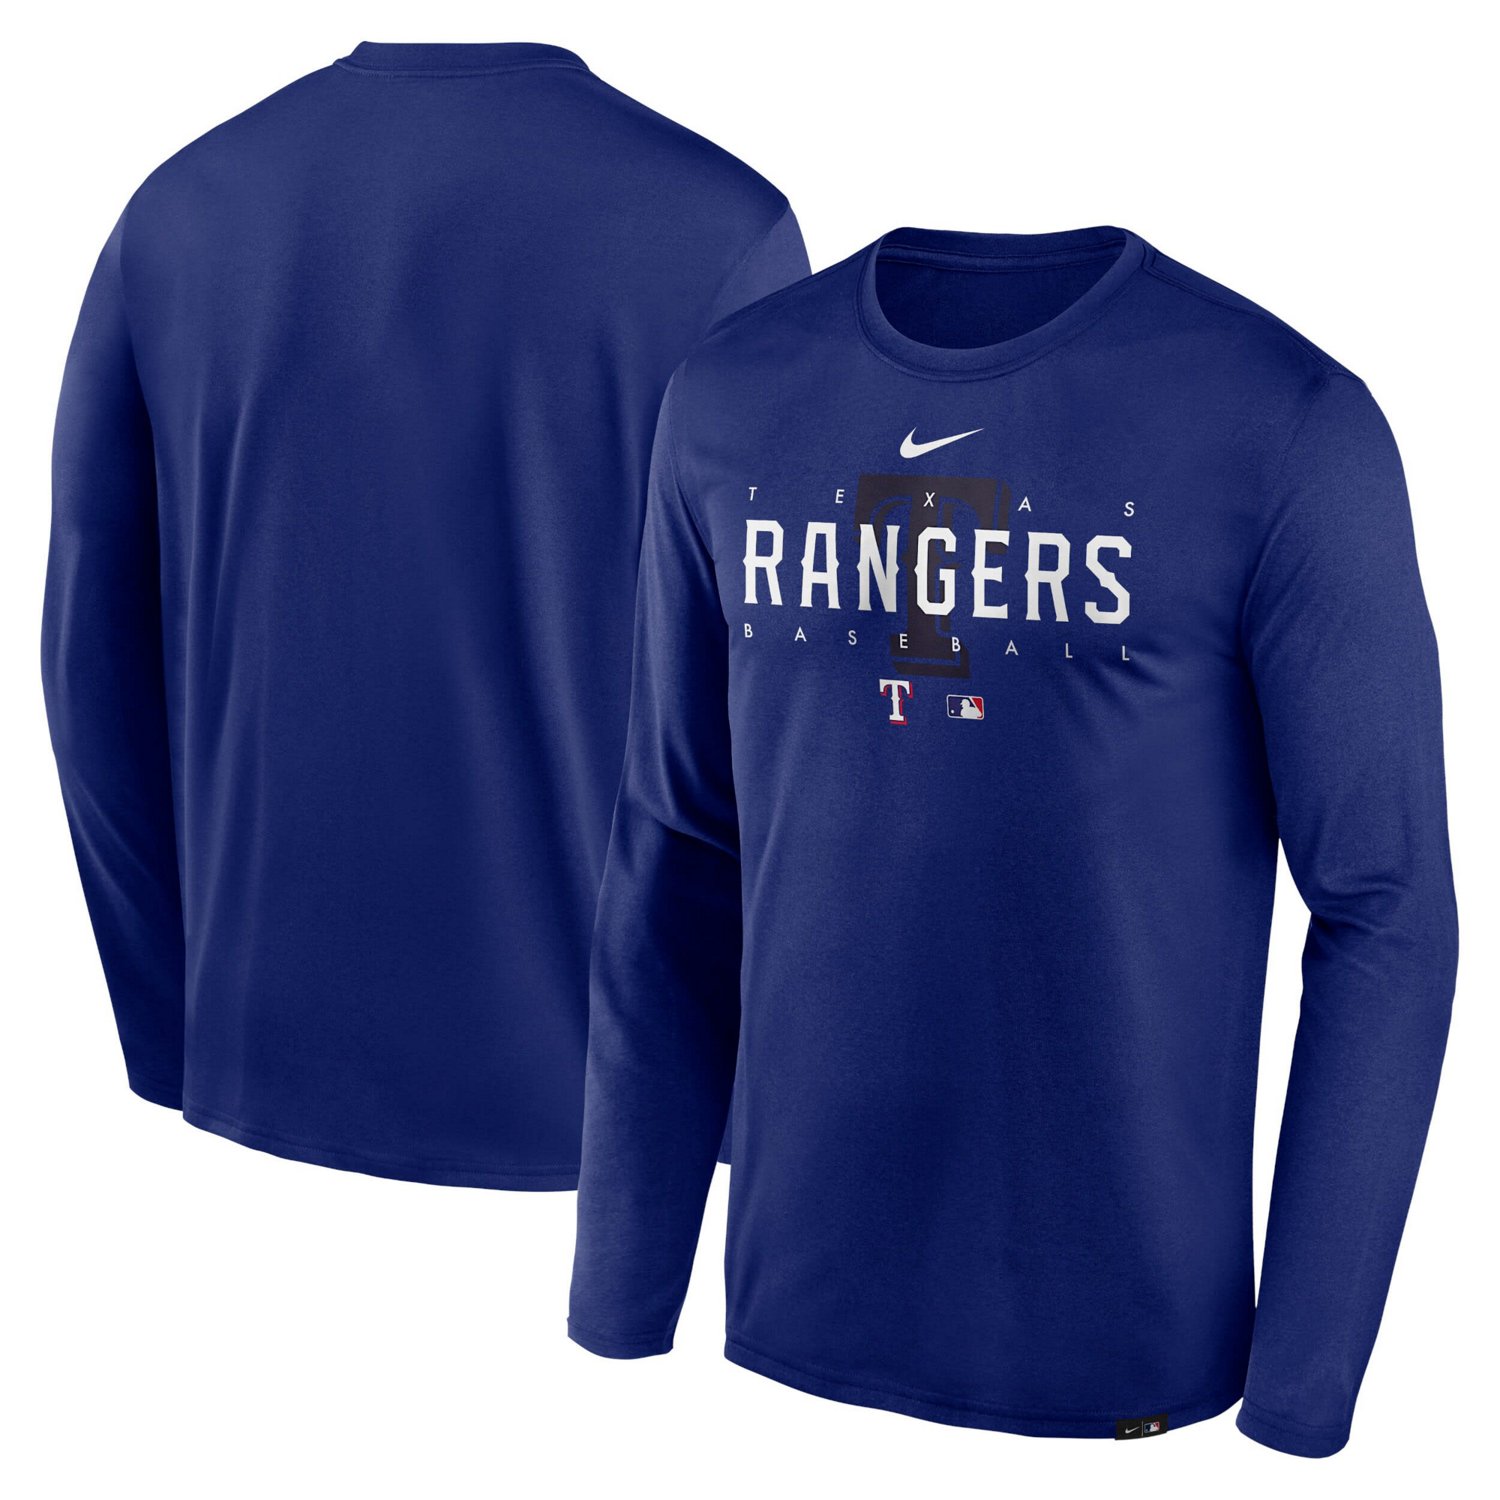 academy texas rangers shirts